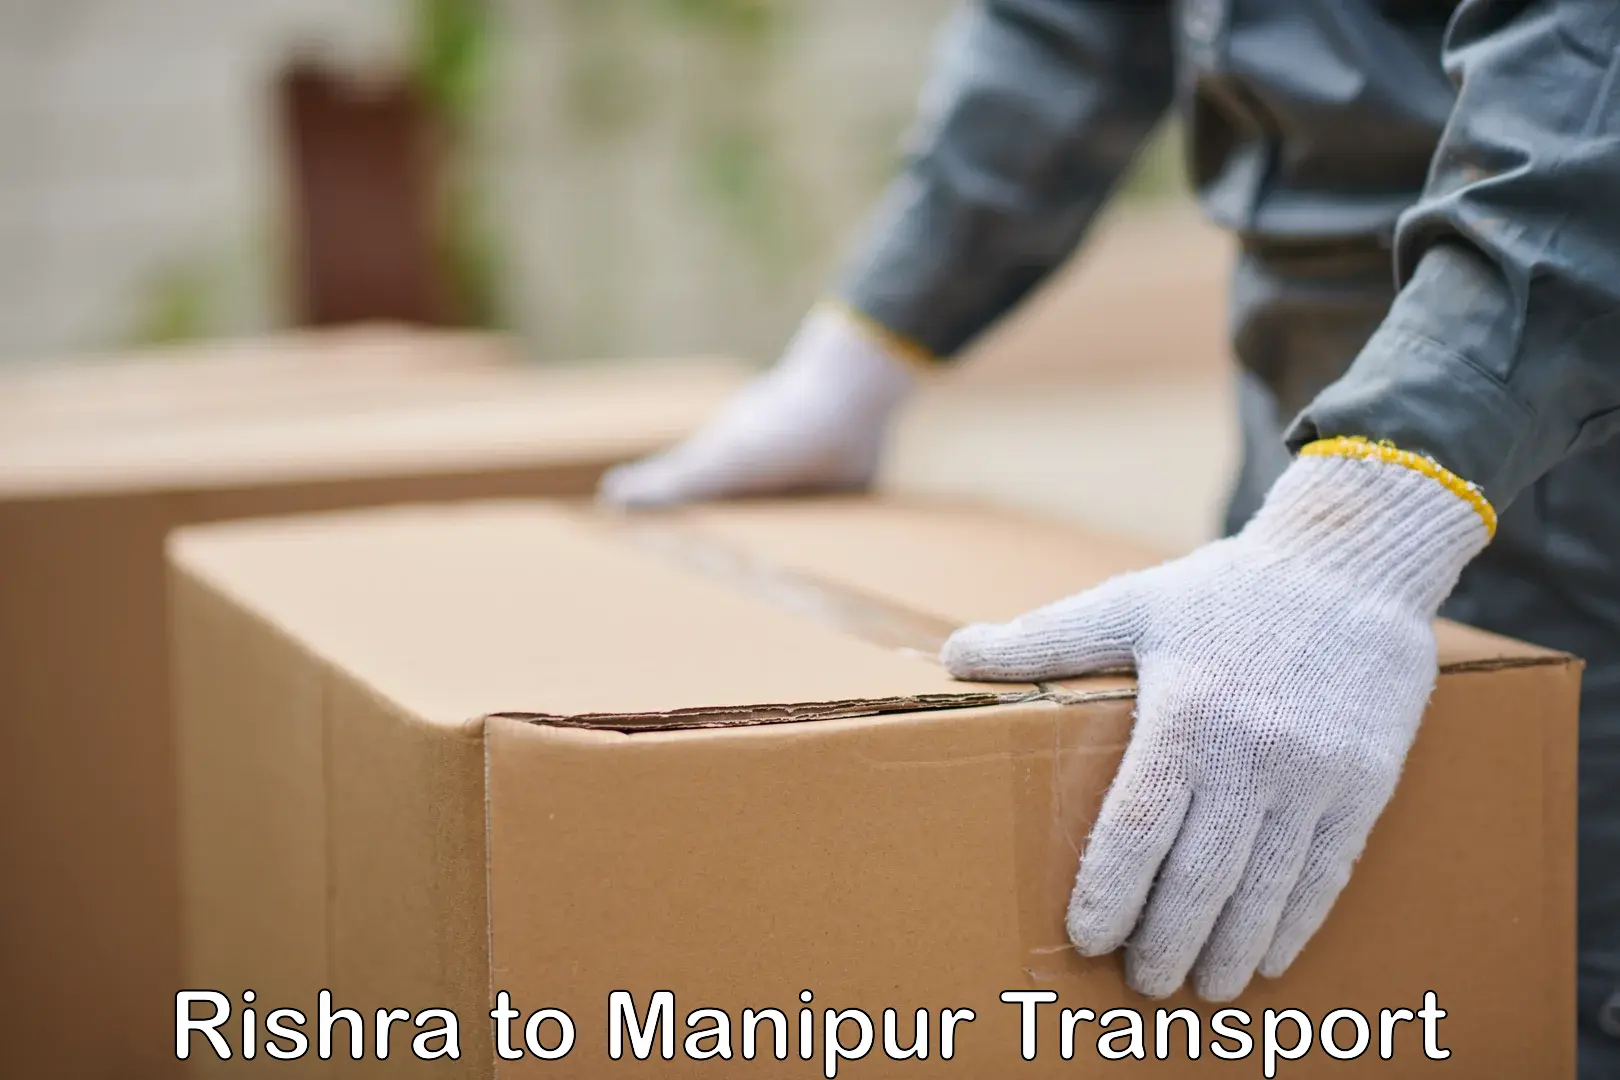 Furniture transport service Rishra to Manipur